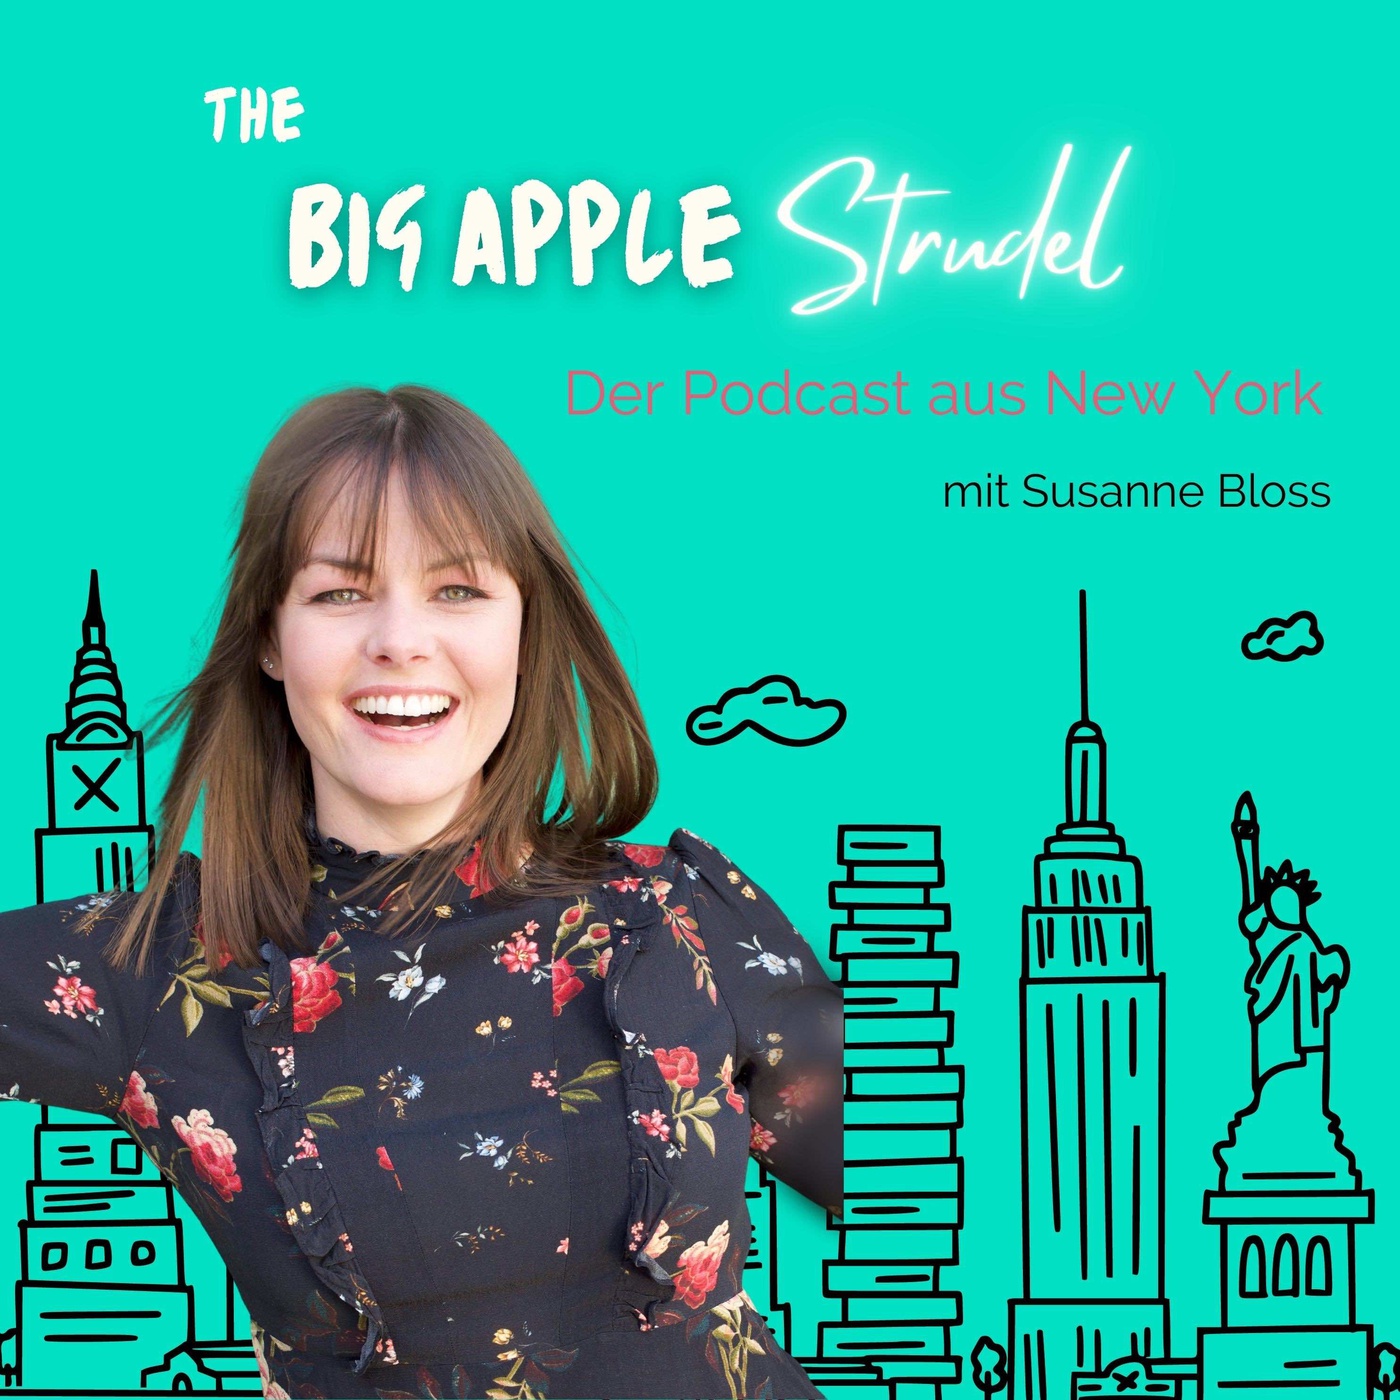 The Big Apple Strudel